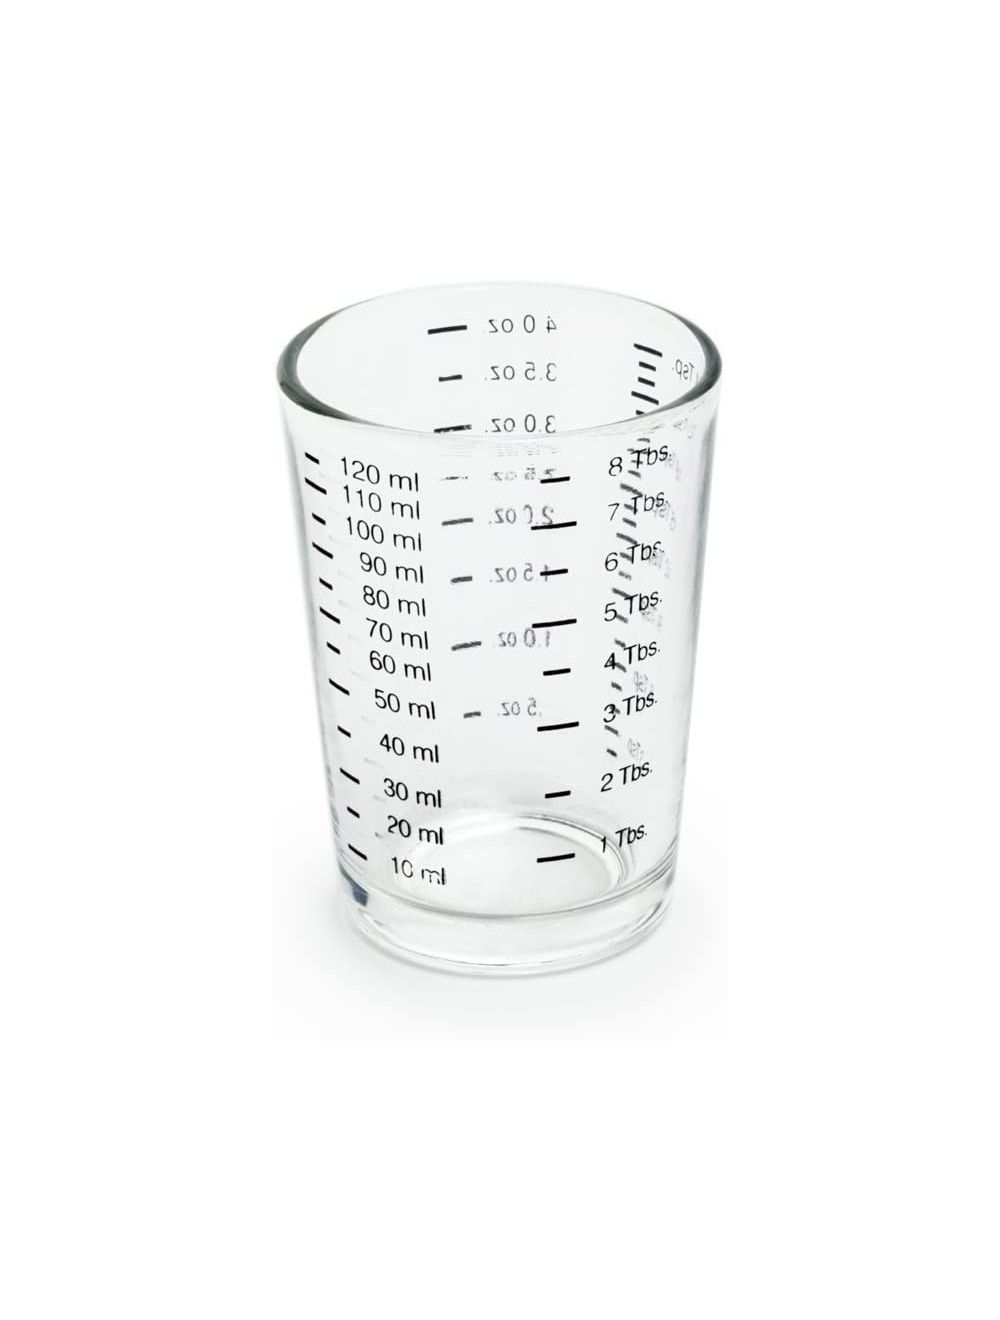 4 oz mini measuring glass